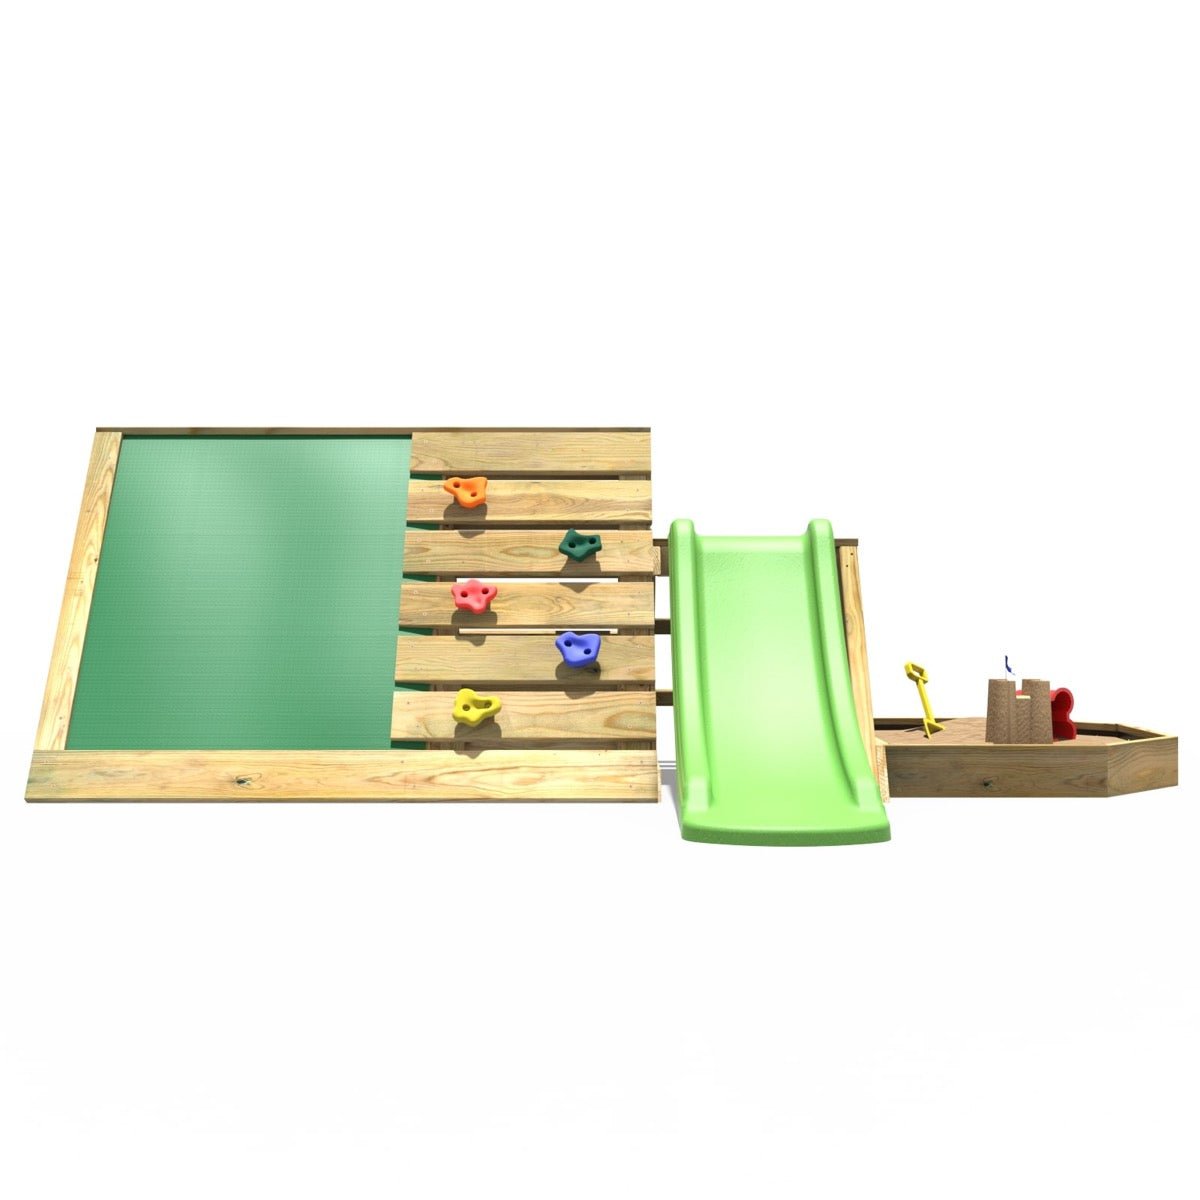 Rebo Mini Wooden Climbing Pyramid Adventure Playset Sandpit, Den & Slide - Green